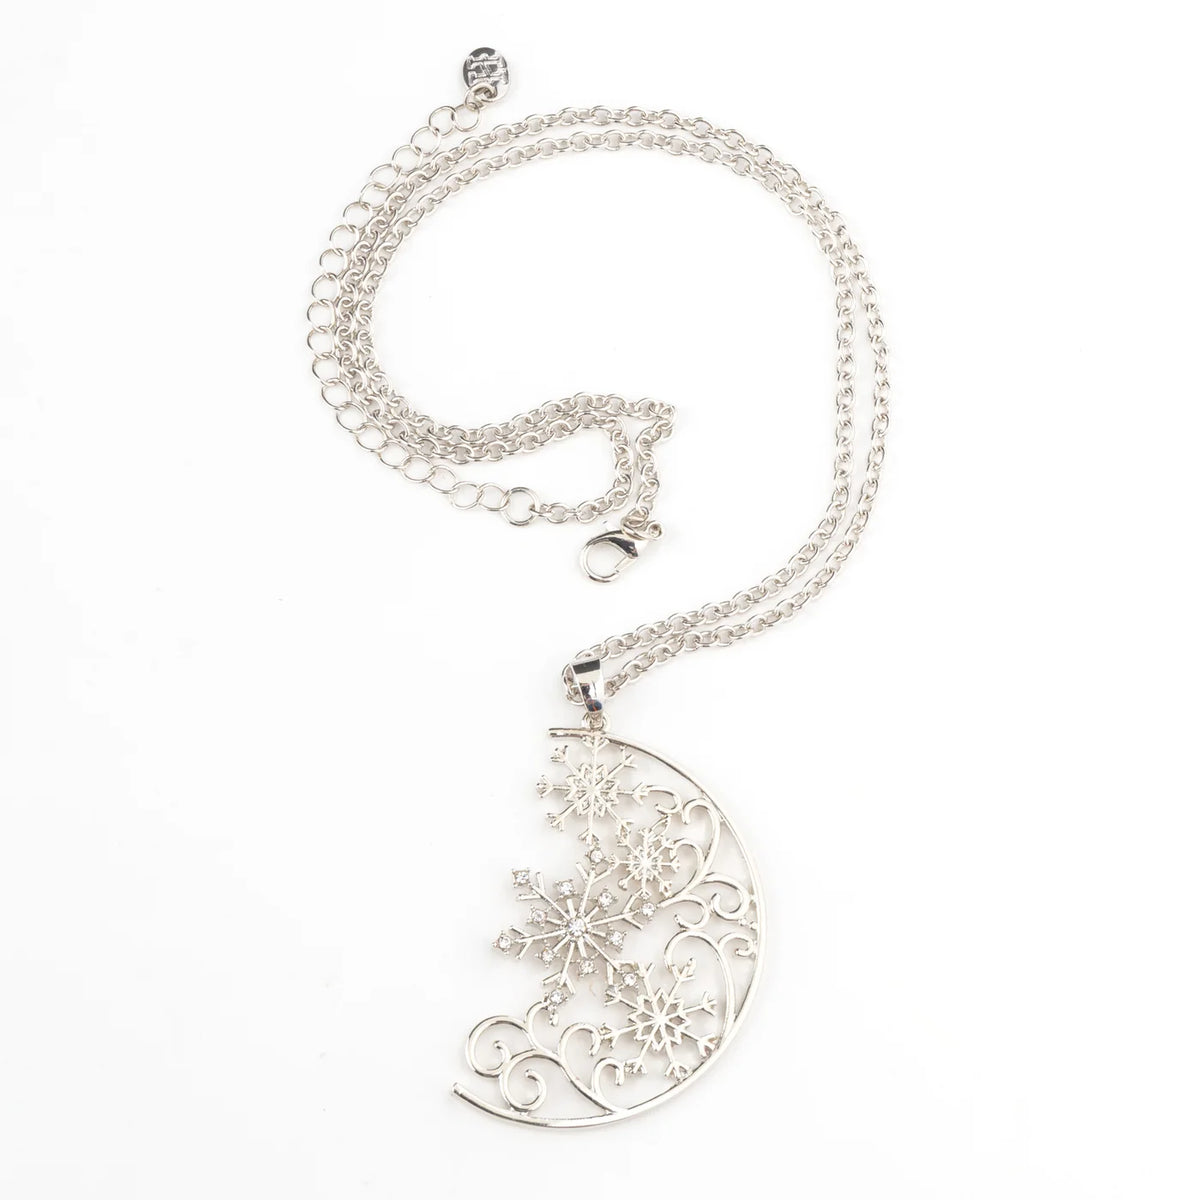 Snowflake Crescent Moon Pendant Silver Necklace